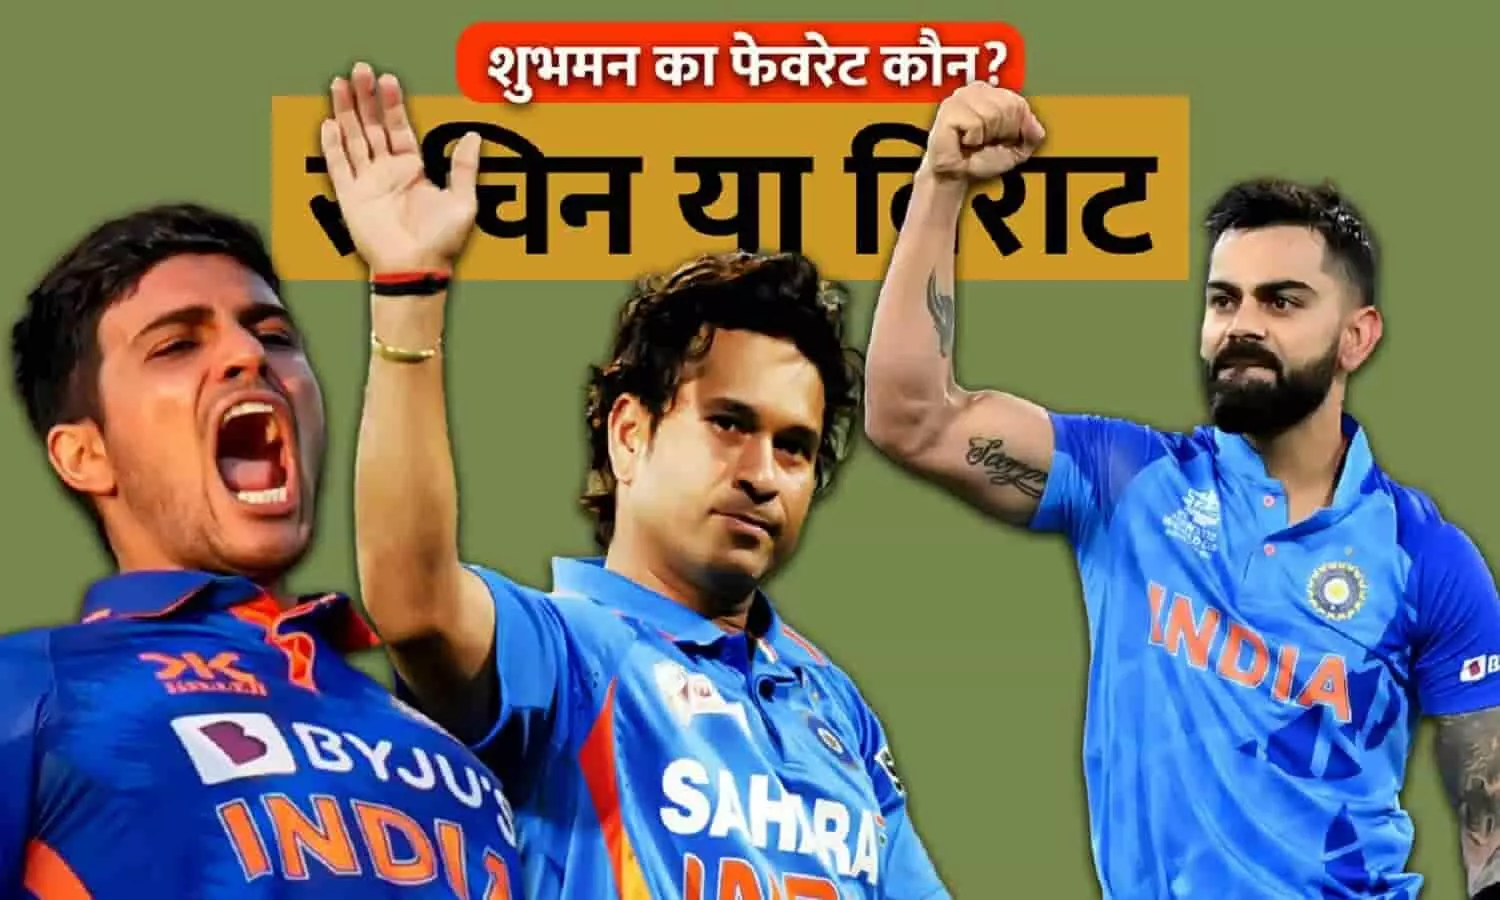 Sachin or Virat? Who is Shubman Gills favorite cricketer?